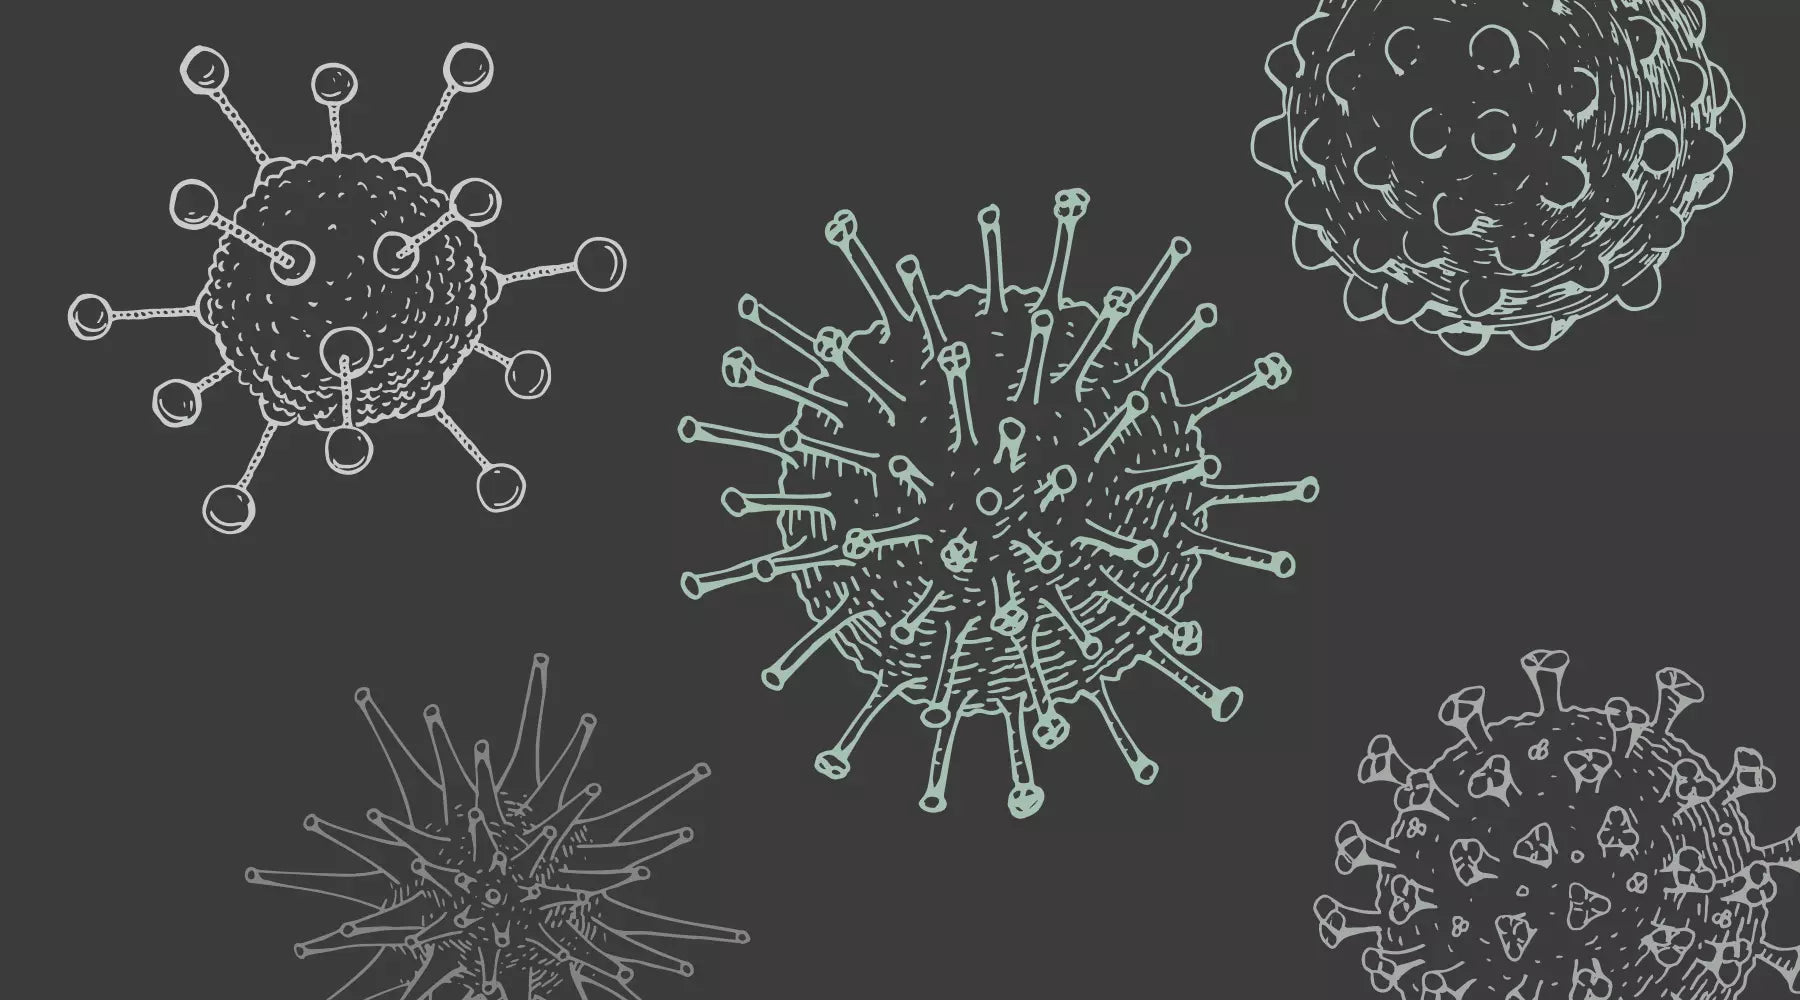 Illustrations of various viruses